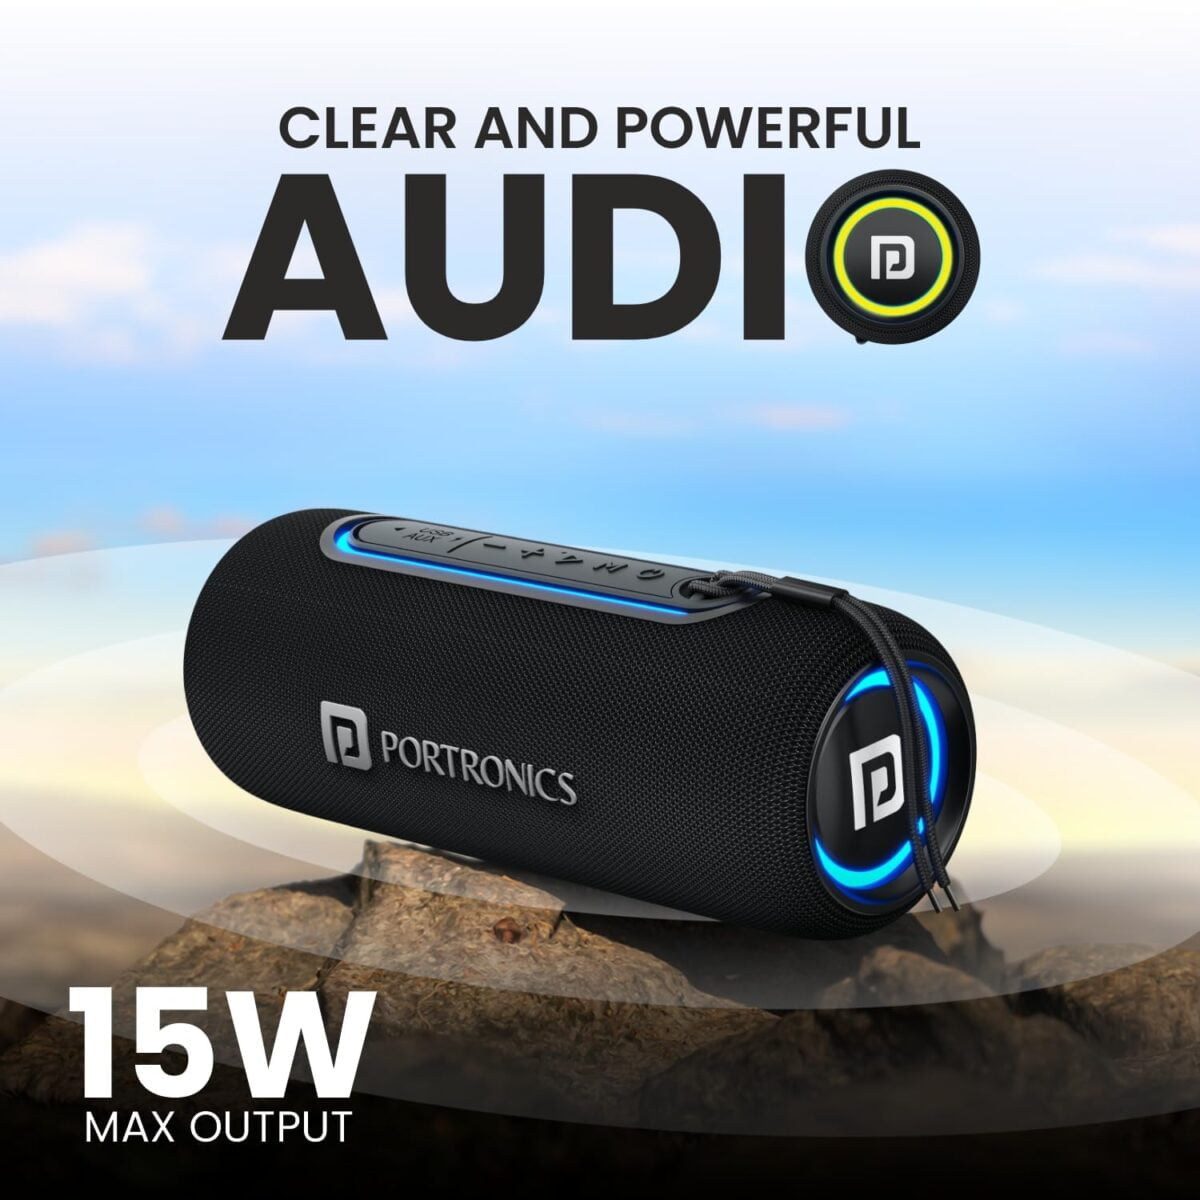 Portronics resound 2 15w hd sound portable wireless bluetooth speaker 7 portronics resound 2 15w hd sound portable wireless bluetooth speaker